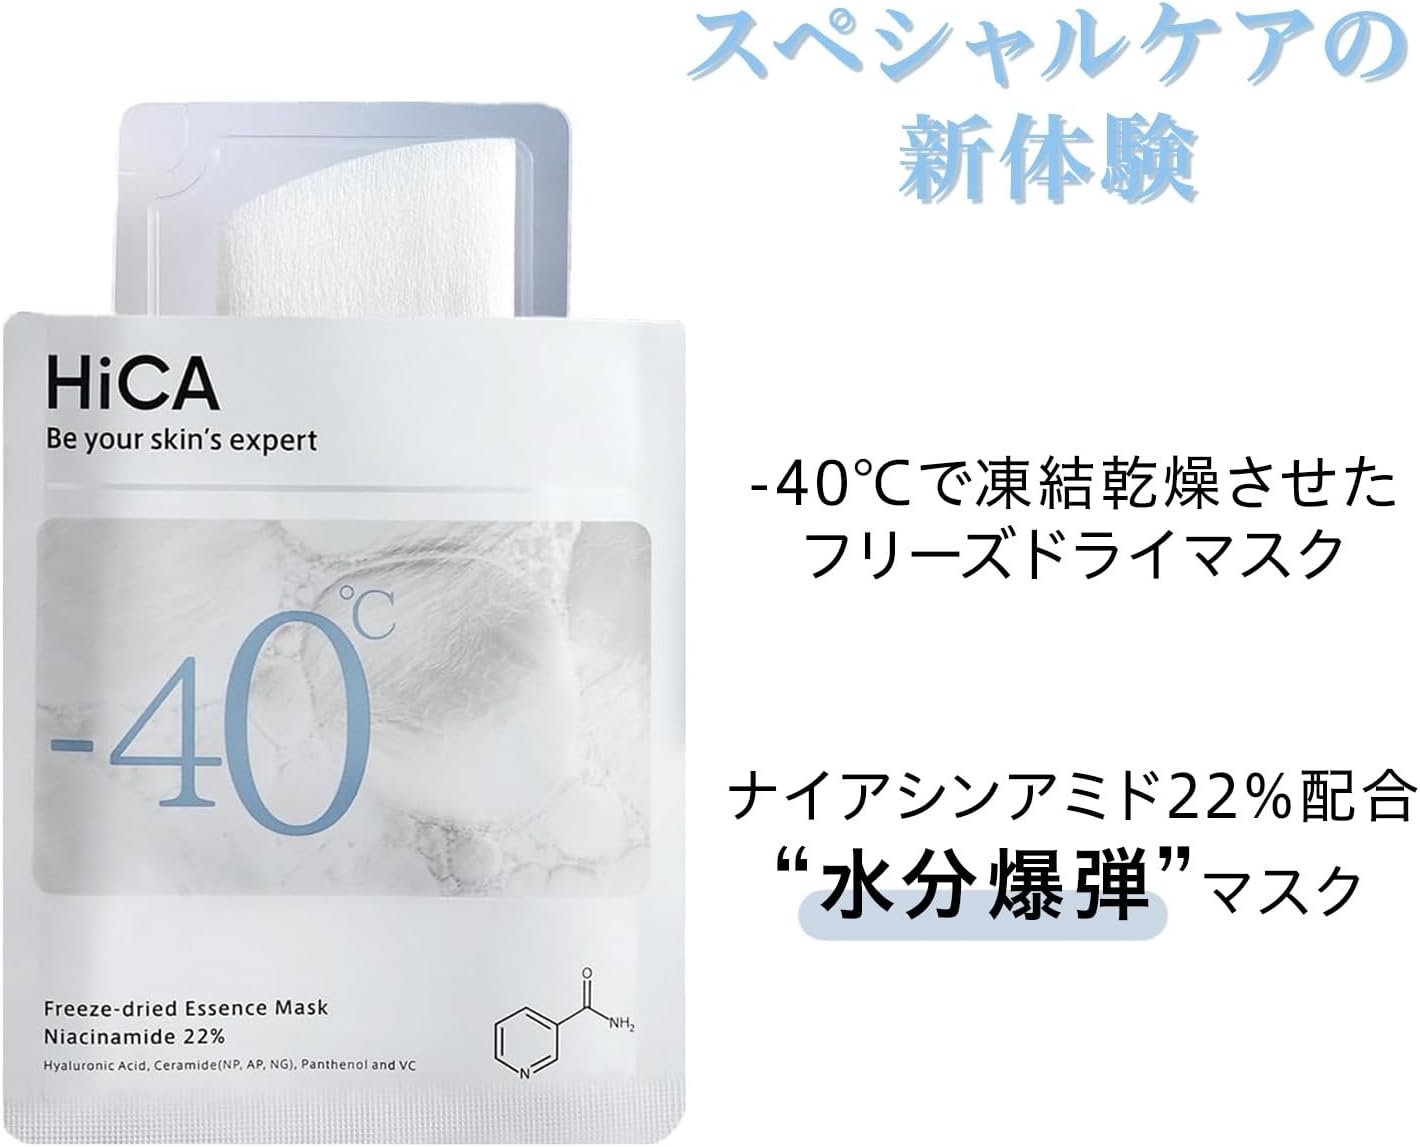 HiCA(ヒカ) フリーズドライエッセンスマスク ナイアシンアミド22%の商品画像2 